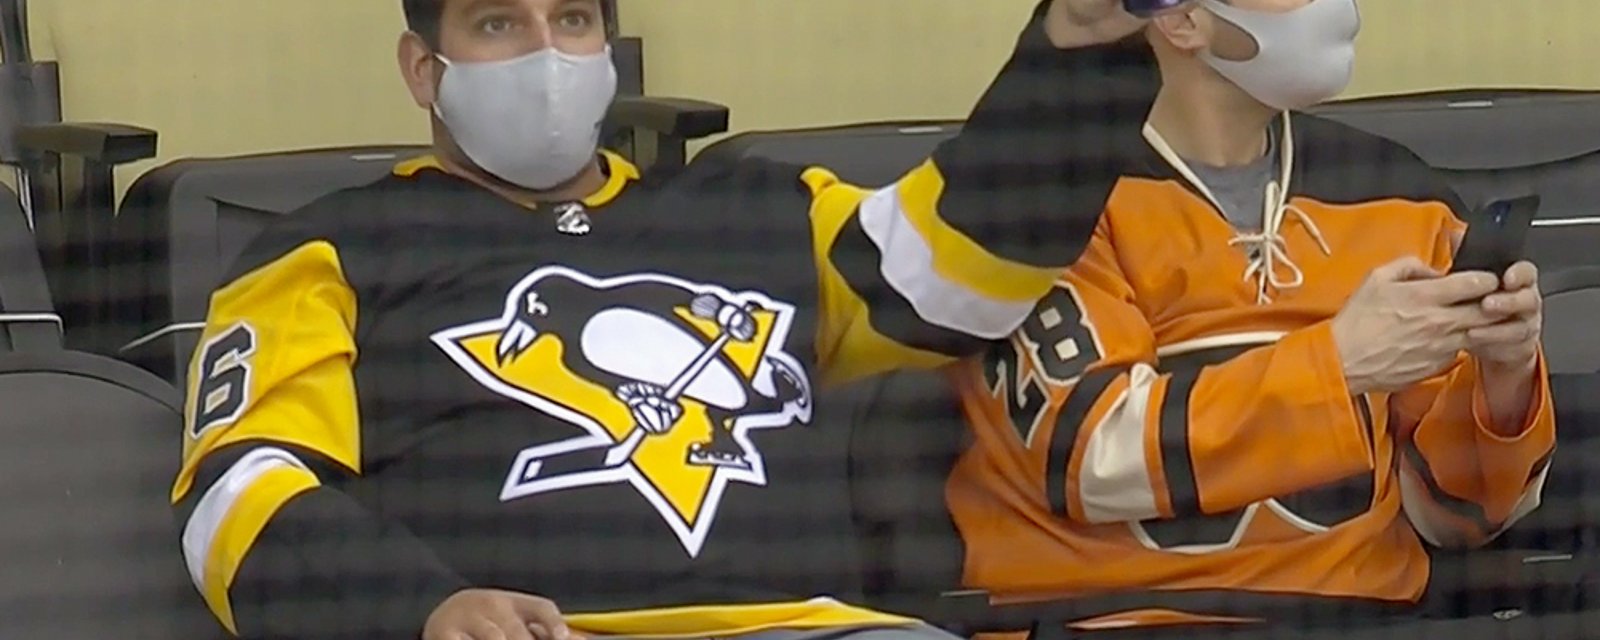 Penguins for Photoshopping masks onto fans in social media posts